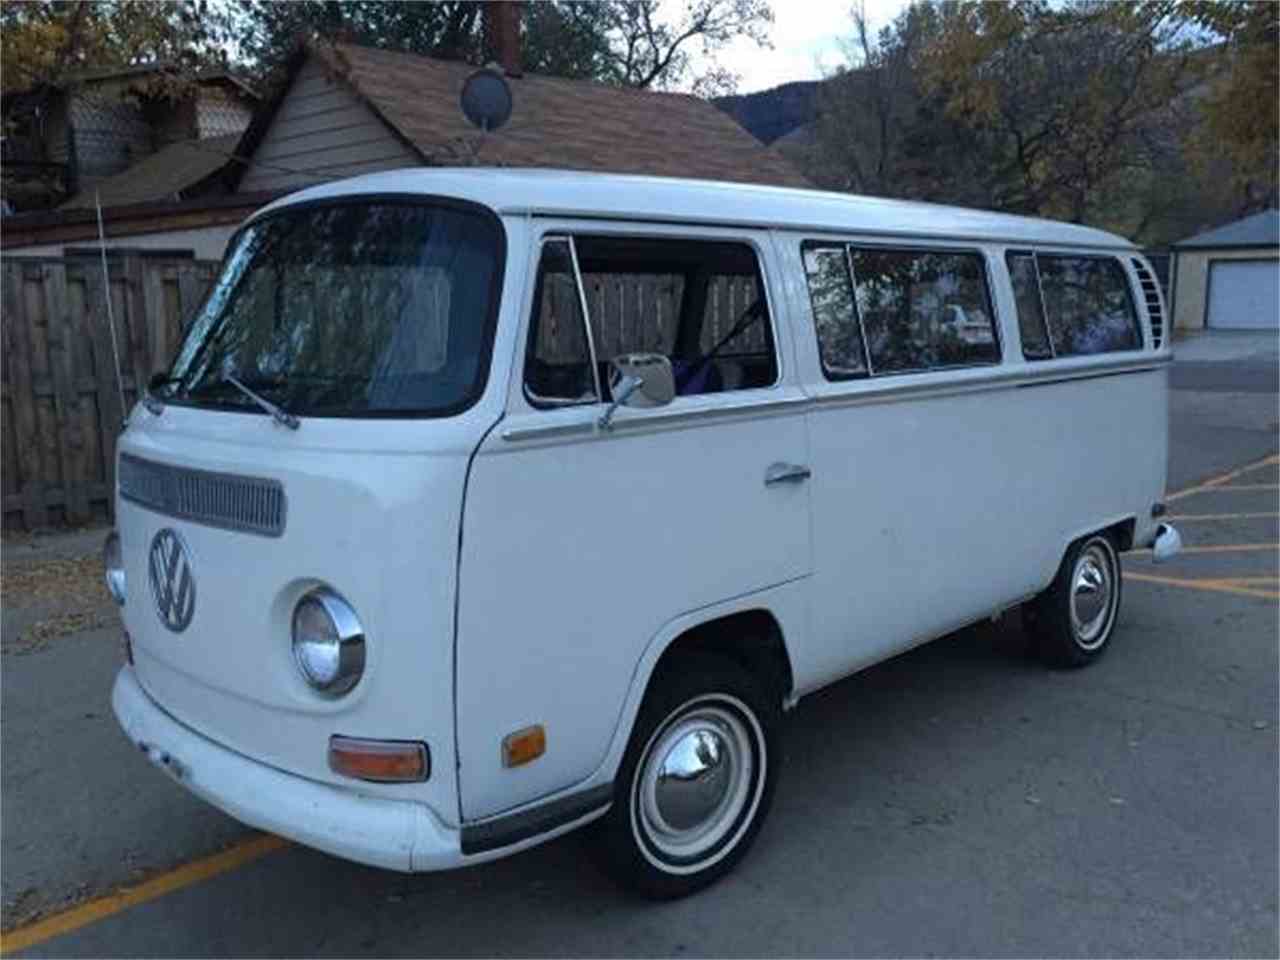 1970 Volkswagen Bus for Sale | ClassicCars.com | CC-987286